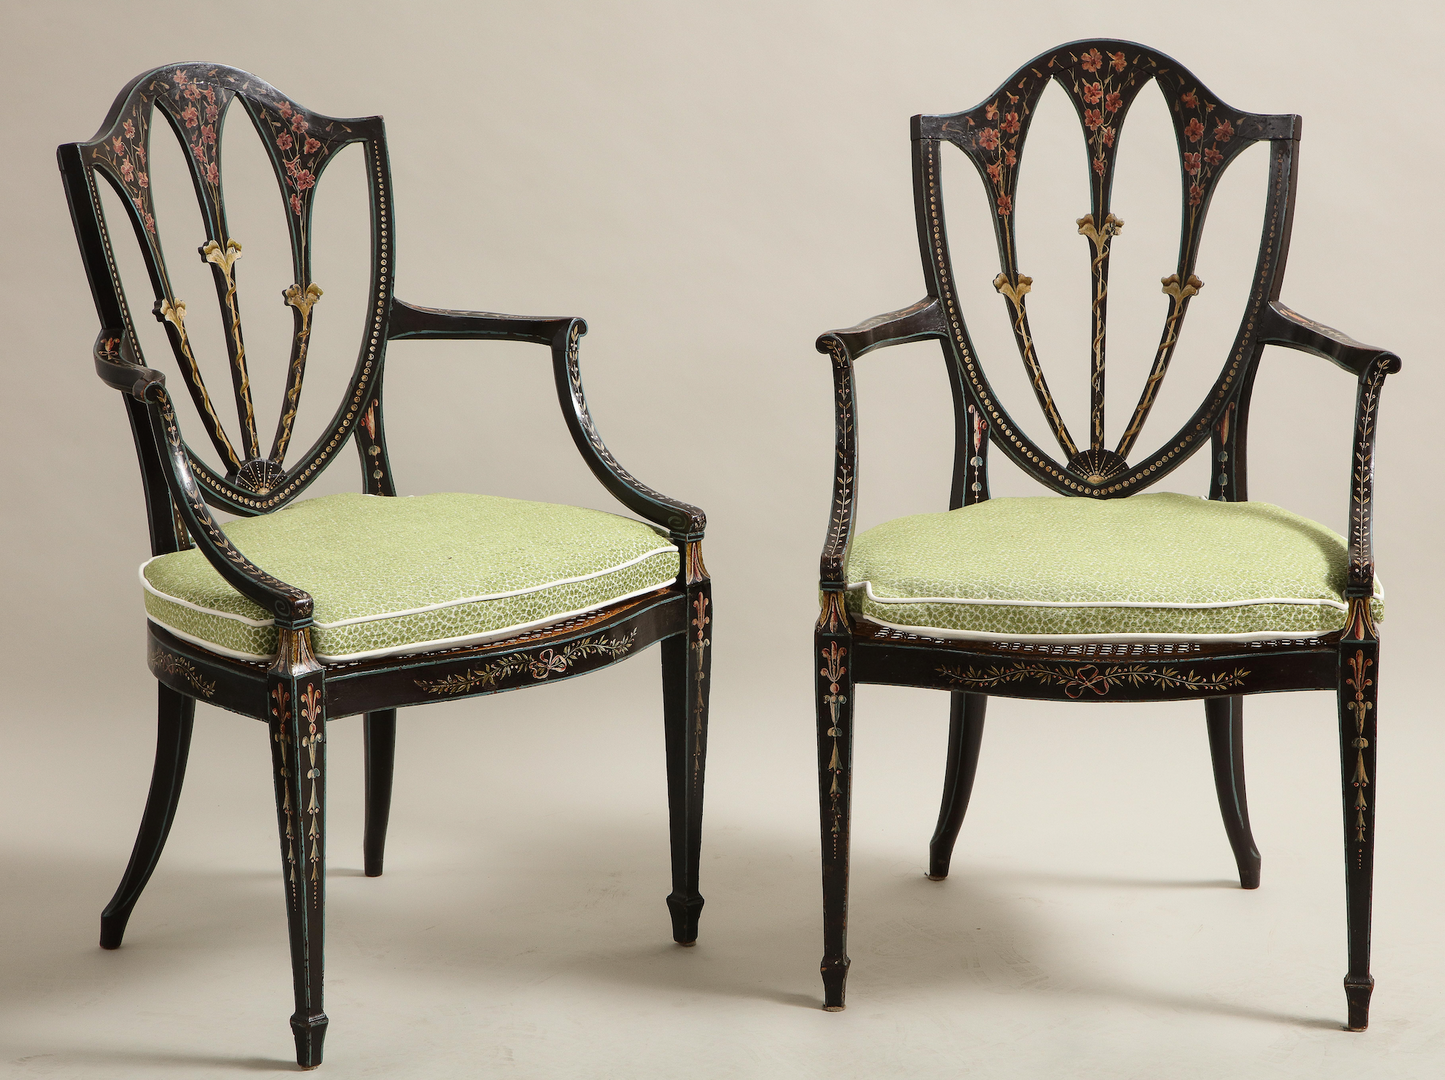 Pair of Hepplewhite Painted Open Armchairs, circa 1785